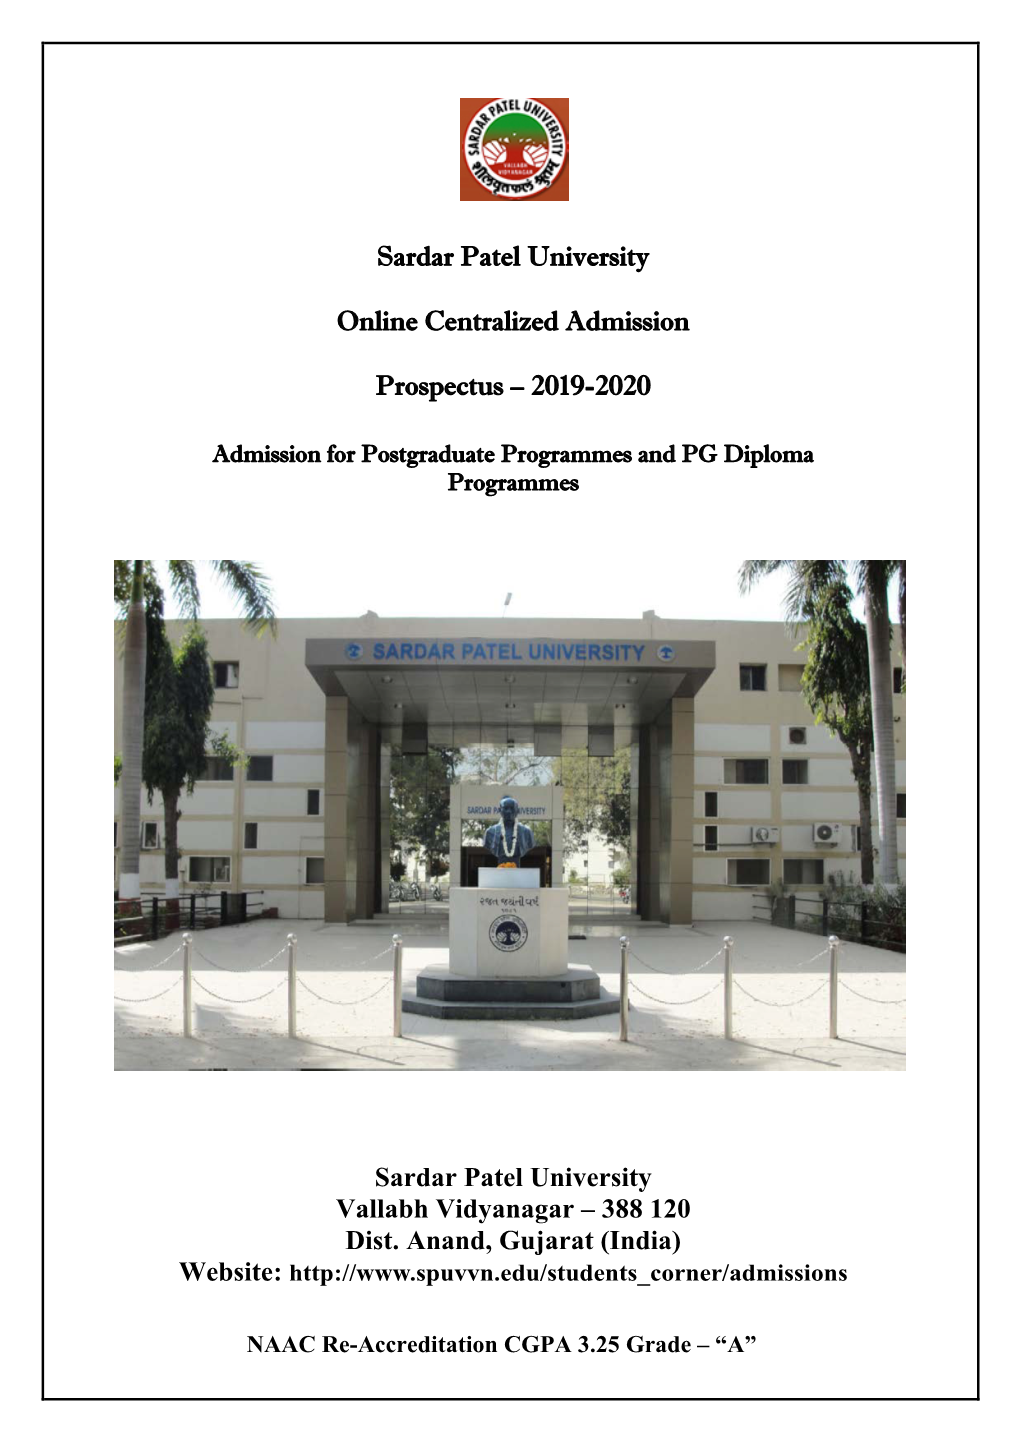 Sardar Patel University Online Centralized Admission Prospectus